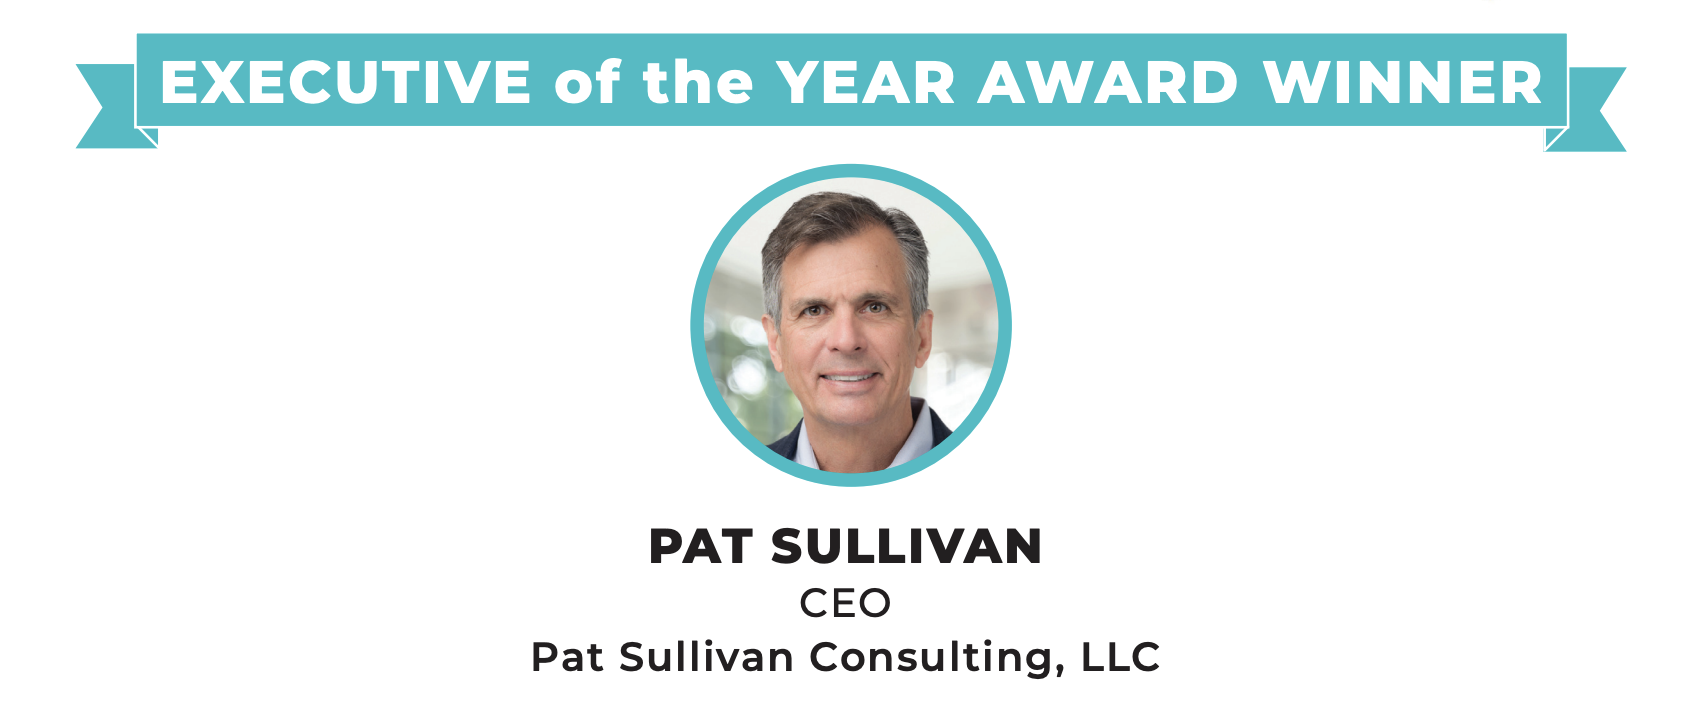 TRG Senior Advisor Pat Sullivan wins Cyber Executive of the Year Award!